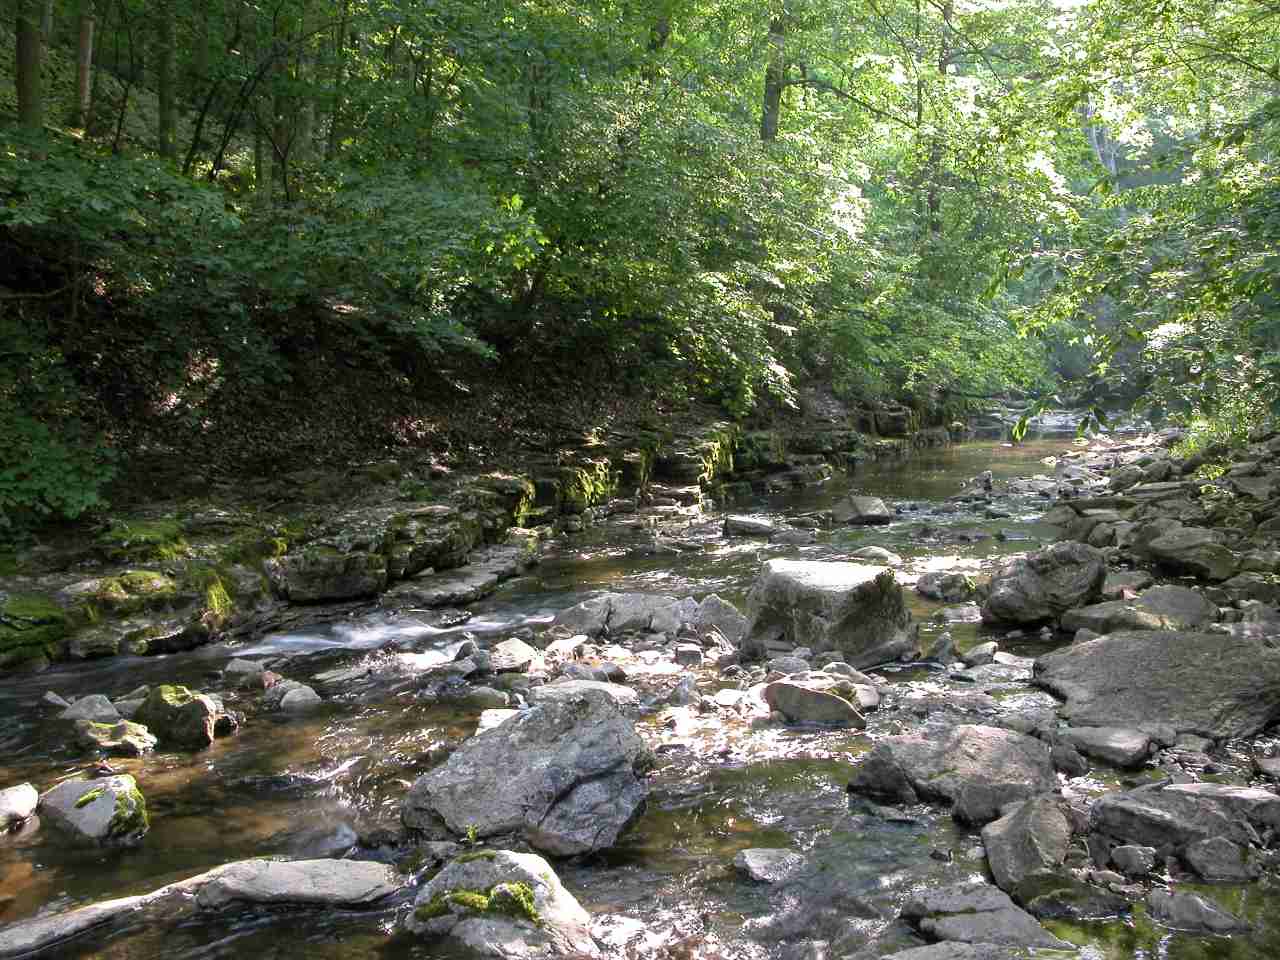 McCormick's Creek